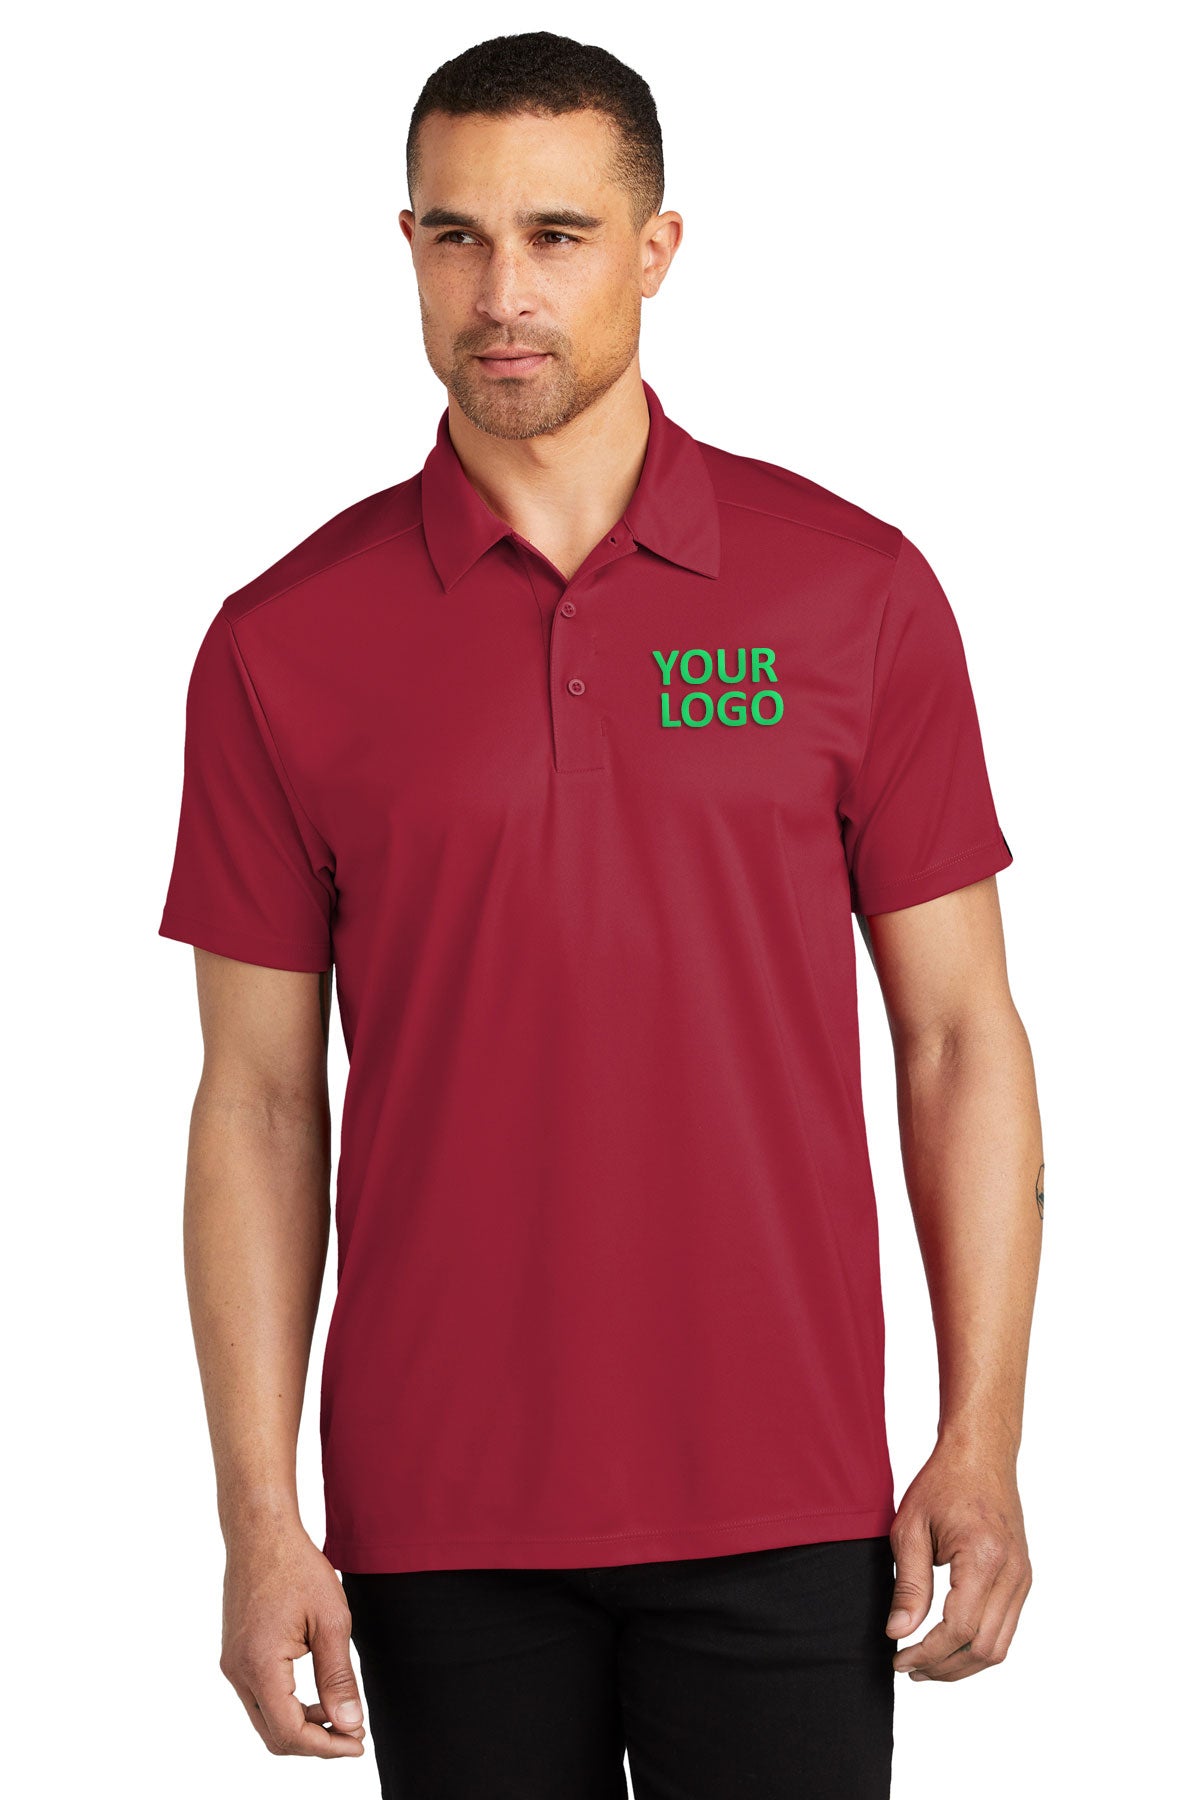 OGIO Signal Red OG125 company polo shirts embroidery